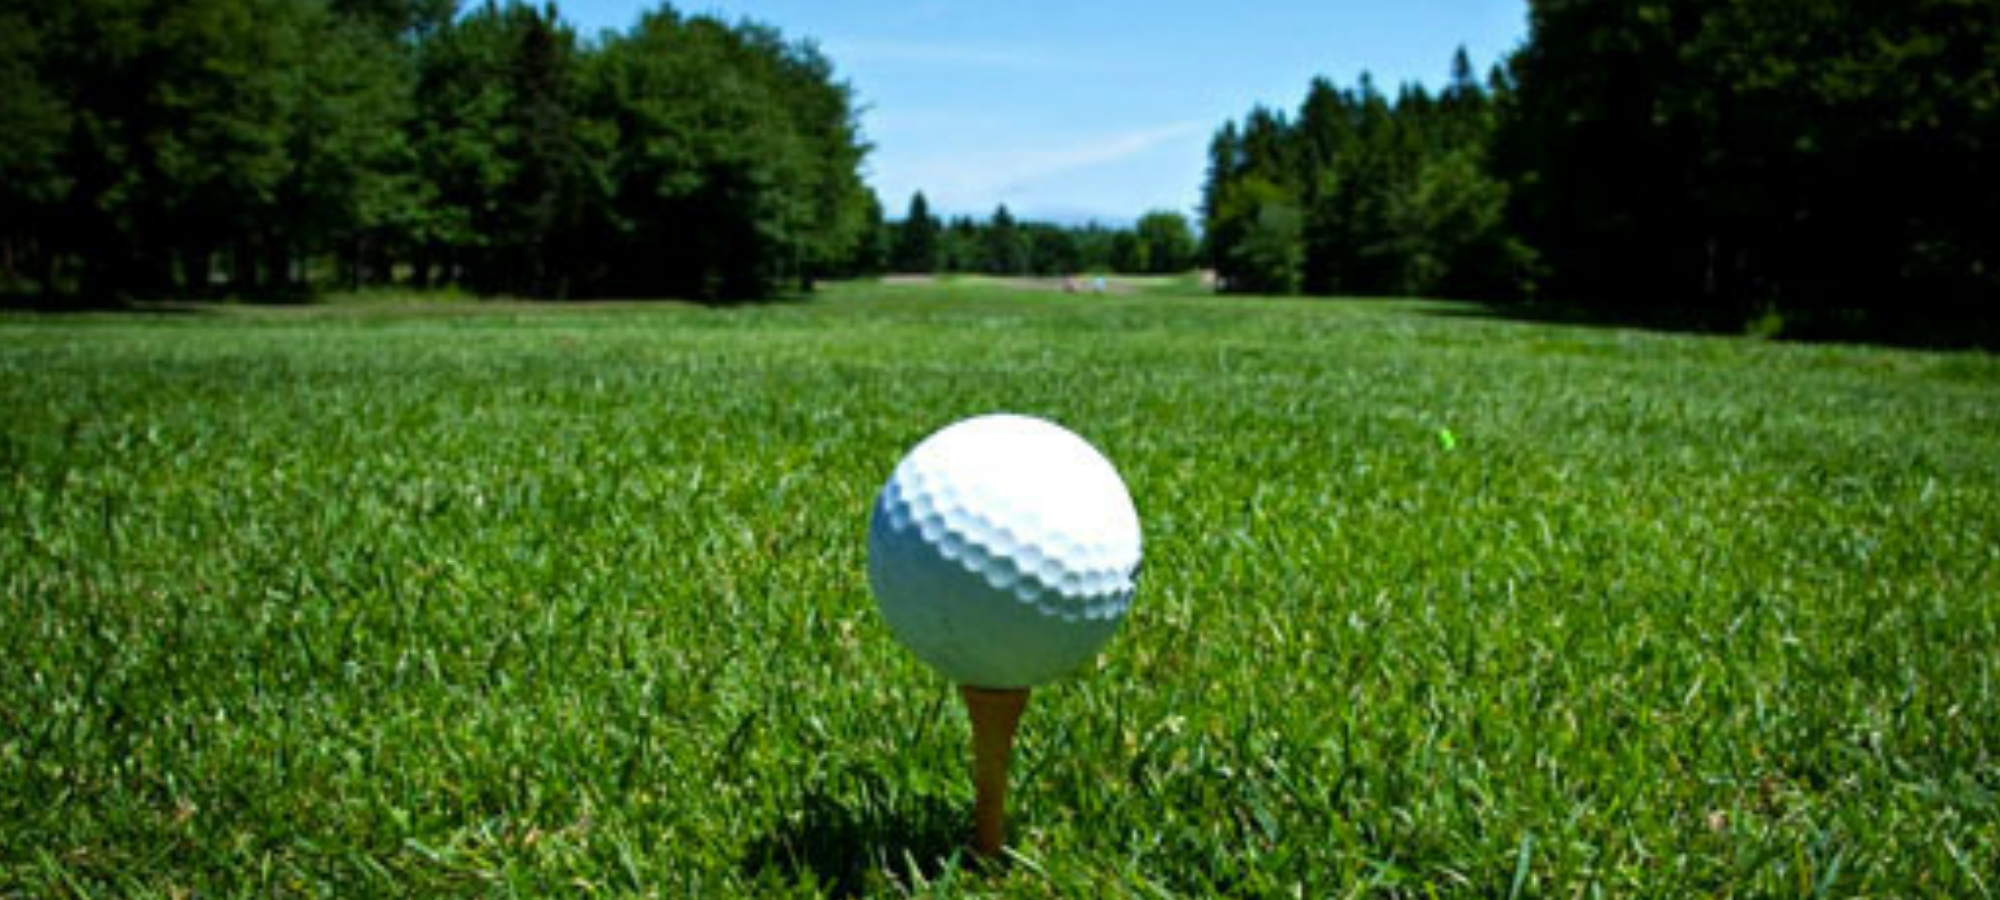 Golf to Begin Fall Season with John Bohmann Memorial Invitational on Monday